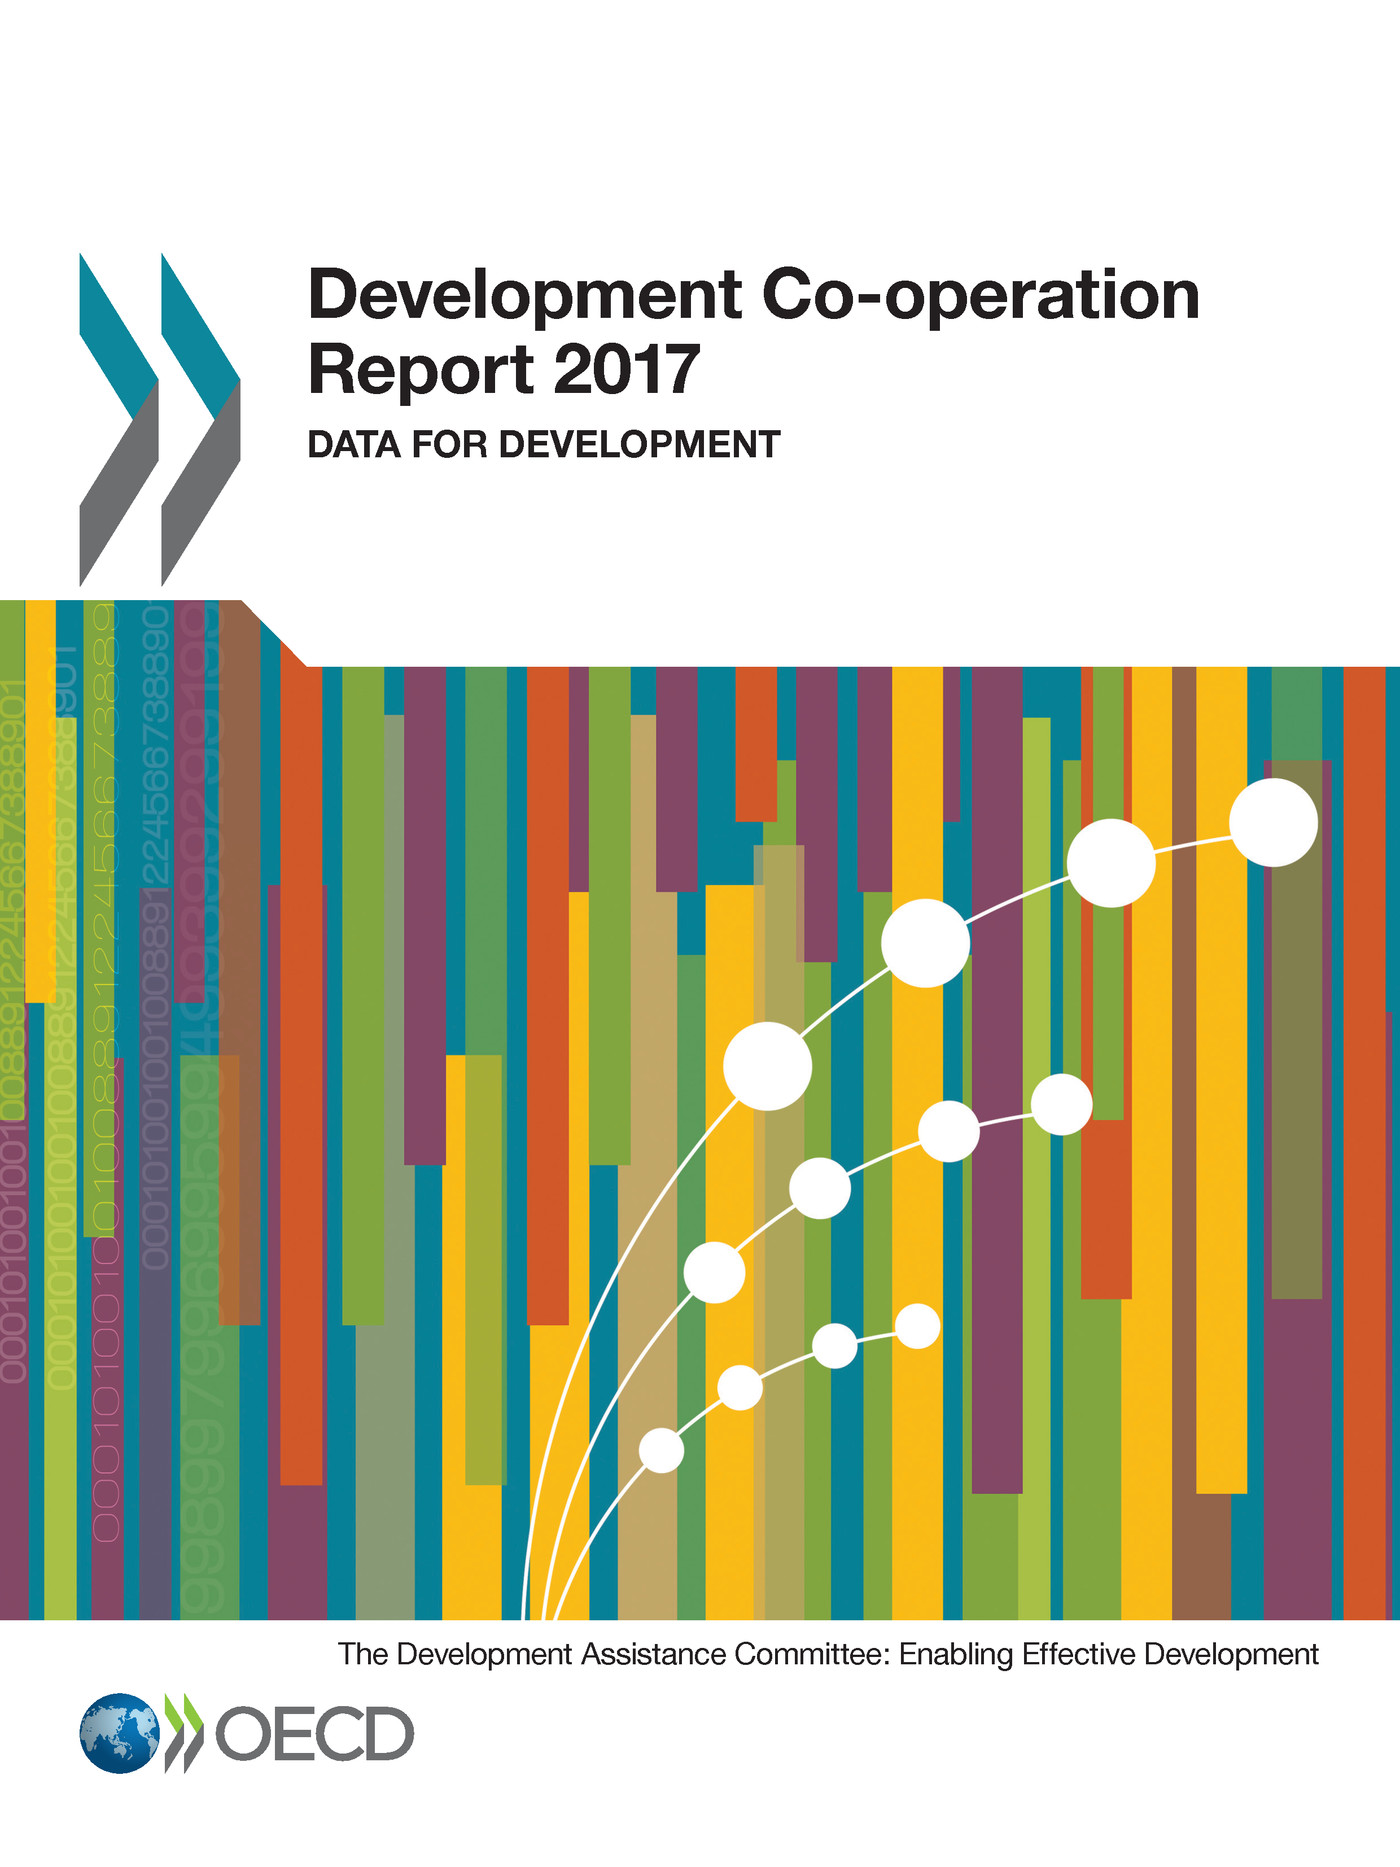 Development Co-operation Report 2017 -  Collectif - OCDE / OECD